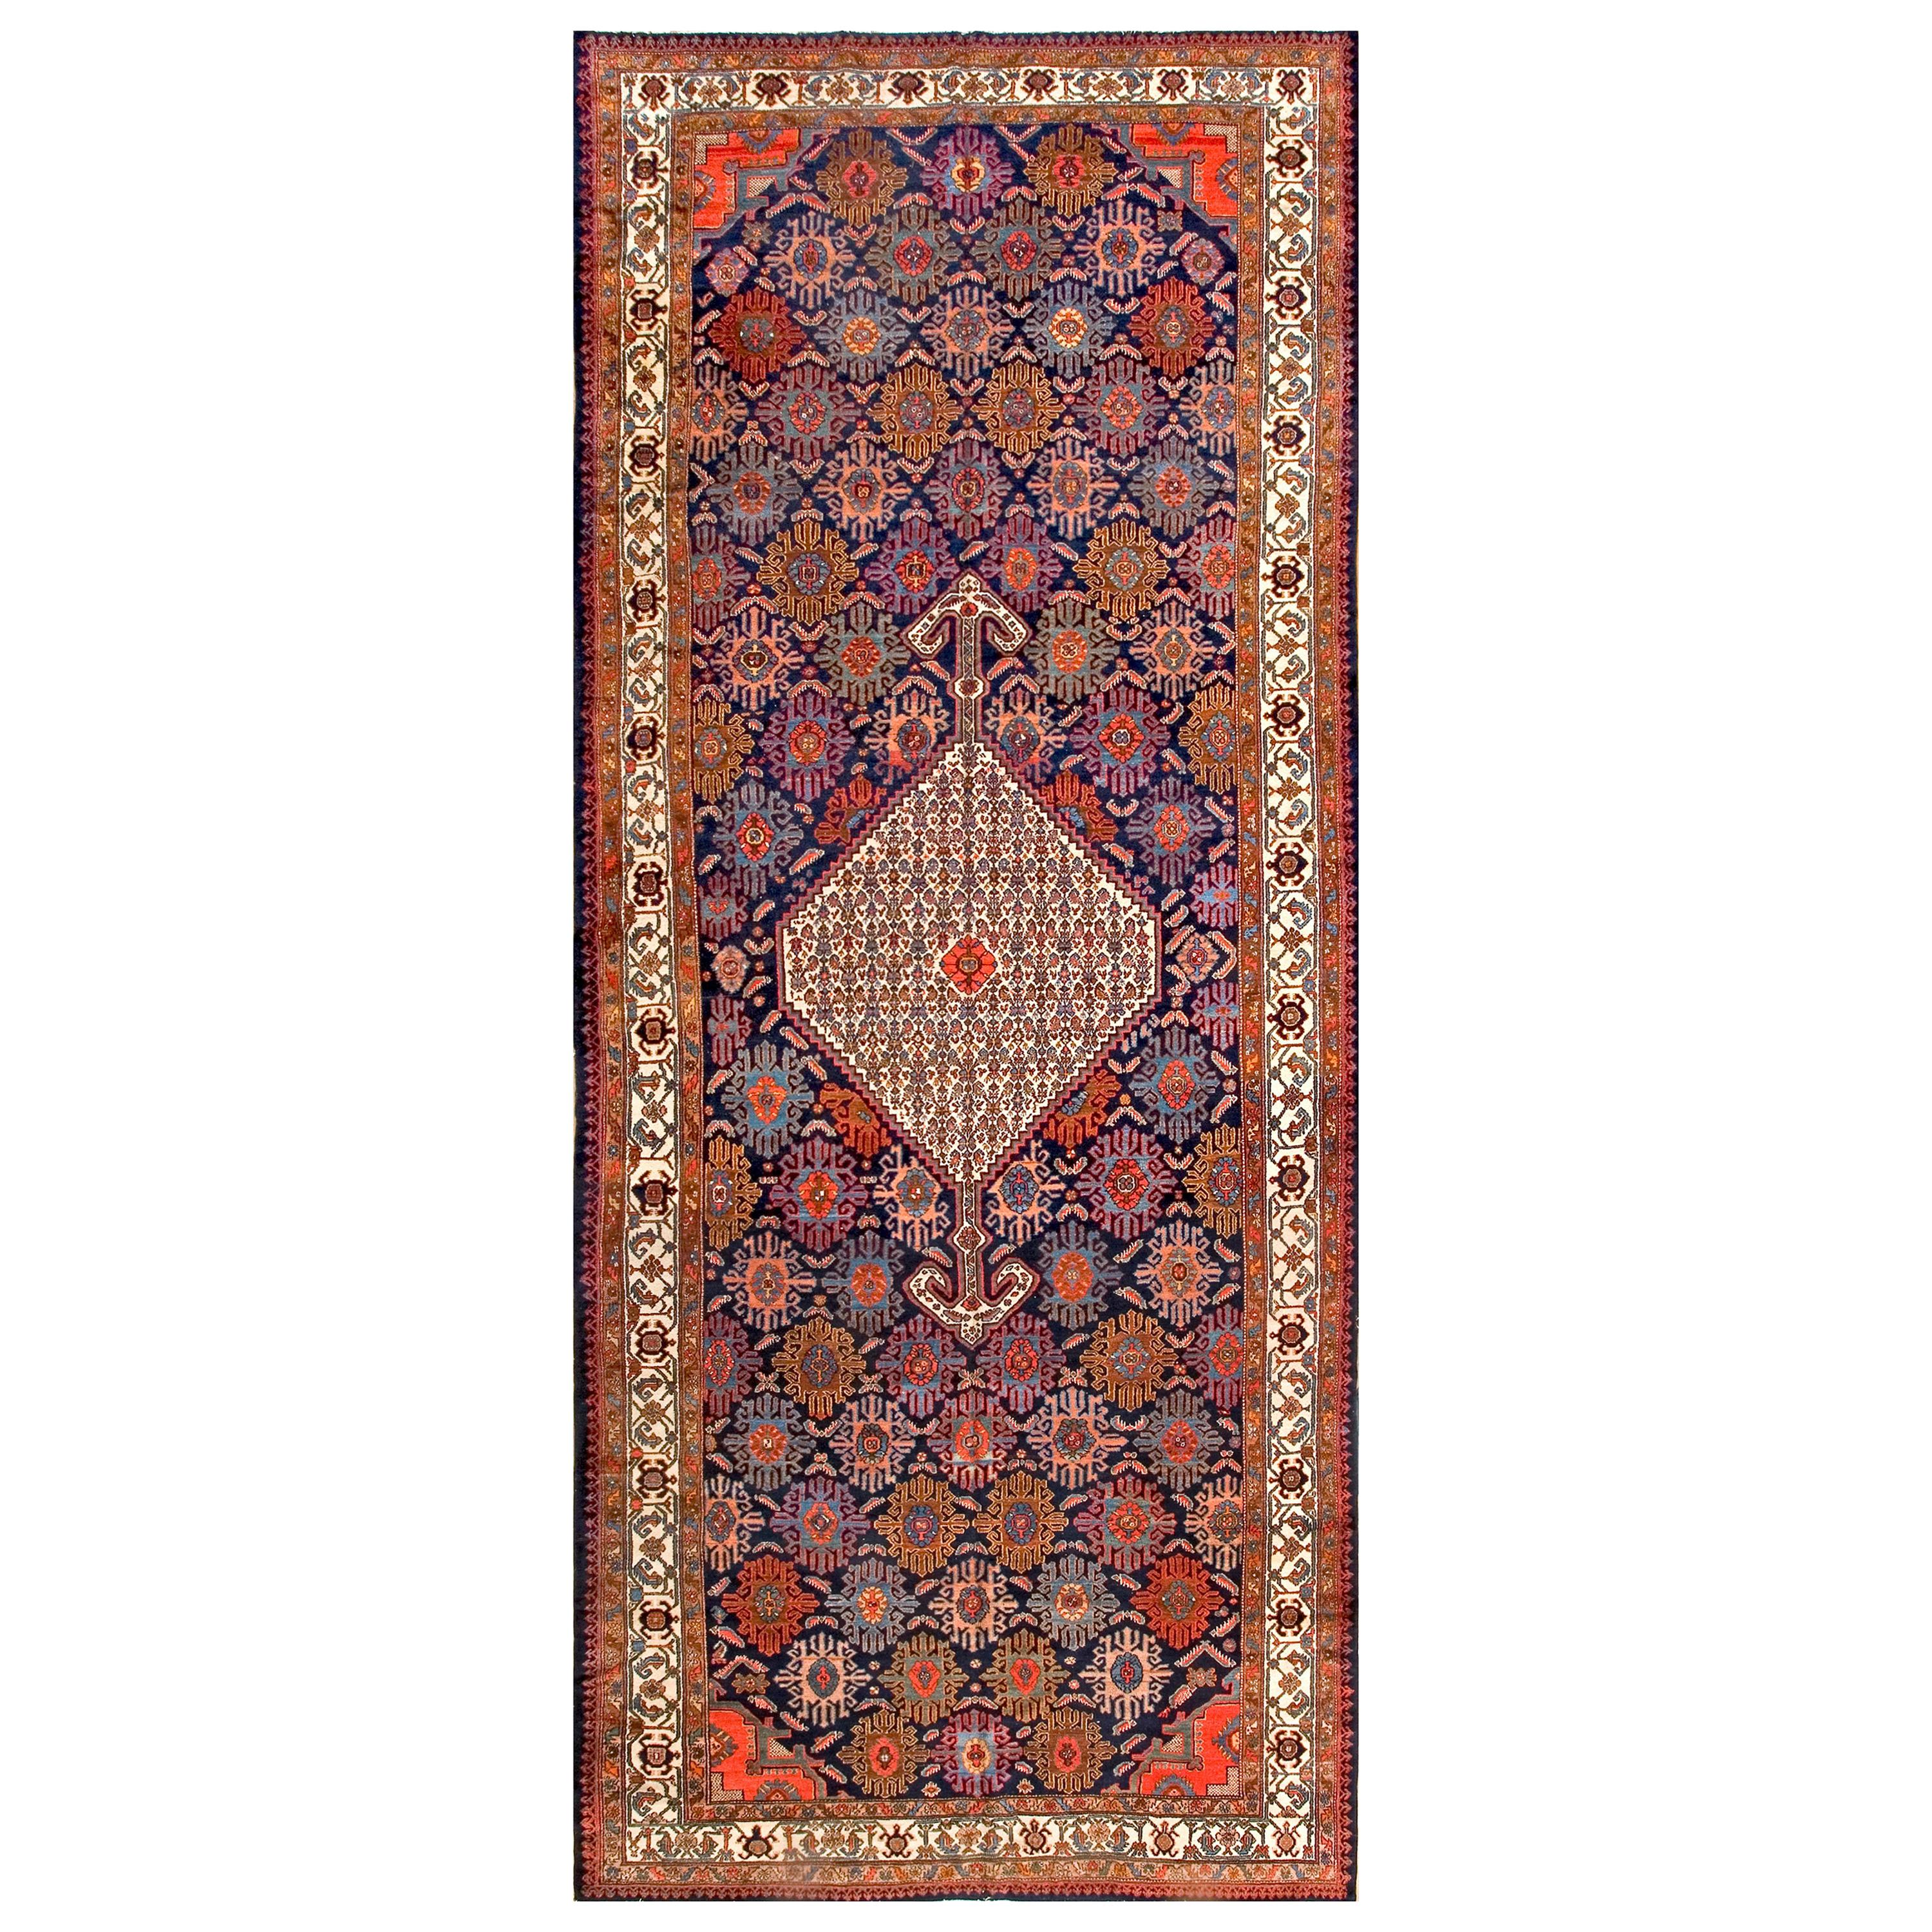 1920s Persian Bibikabad Carpet ( 7'6" x 17'4" - 228 x 528 ) For Sale